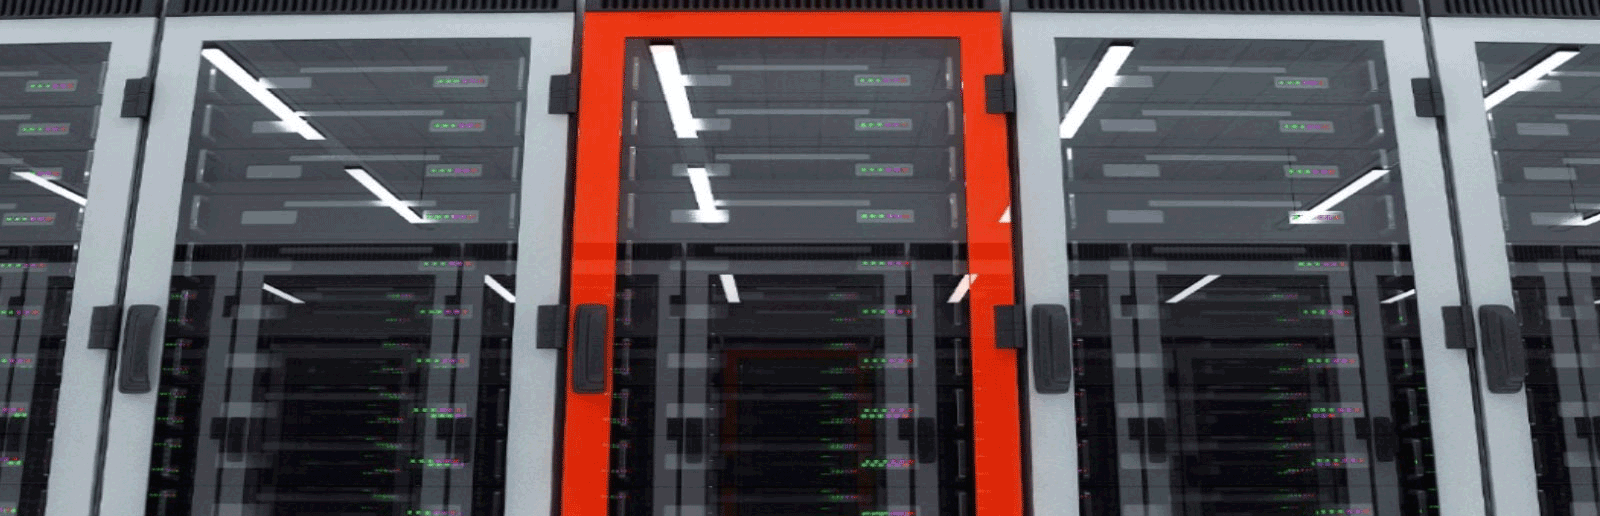 Enterprise NAS Storage Solution for Big Data Storage Challenges